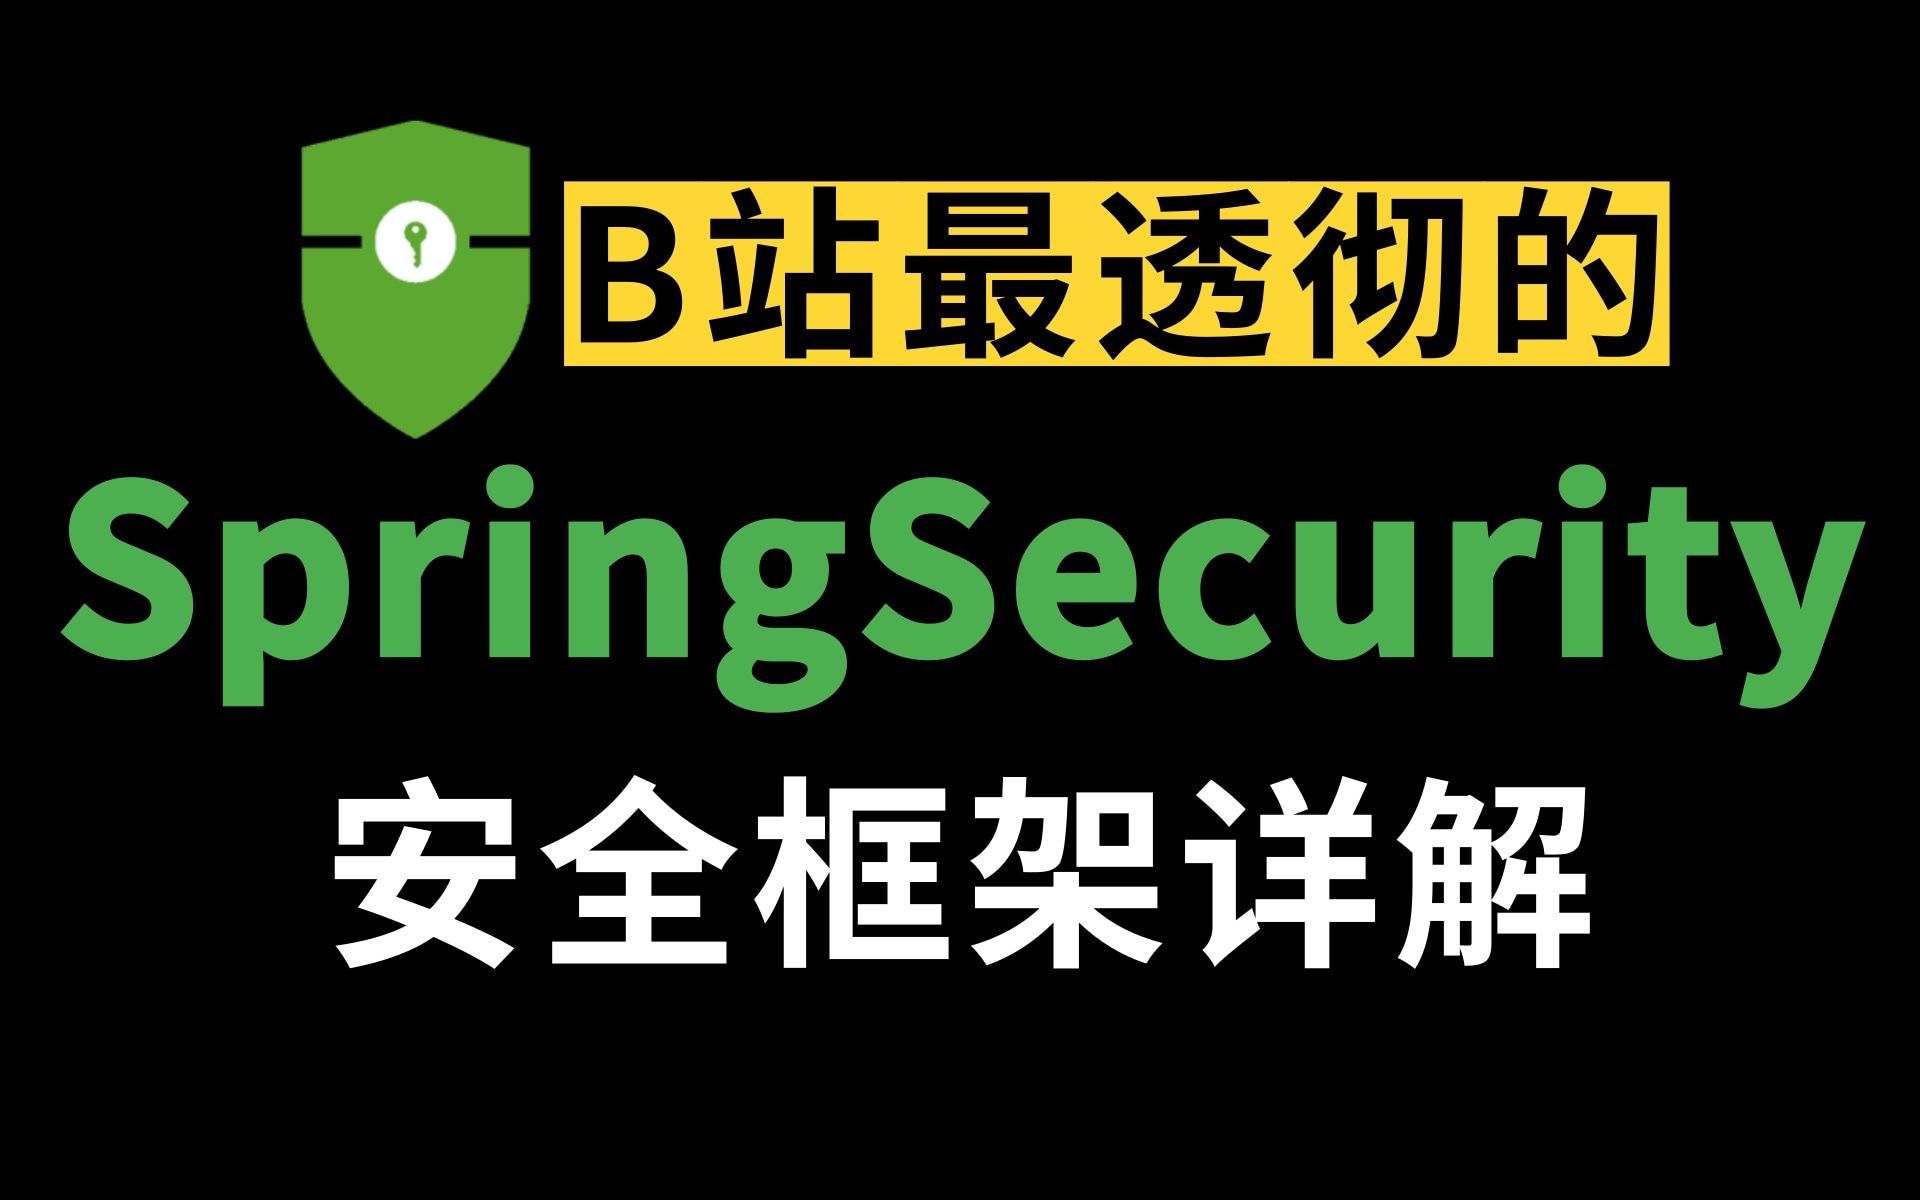 B站讲的最透彻的SpringSecurity整合应用及OAuth2.0实战讲解，全网最热权限管理框架Spring Security核心工作原理分析，深度解读